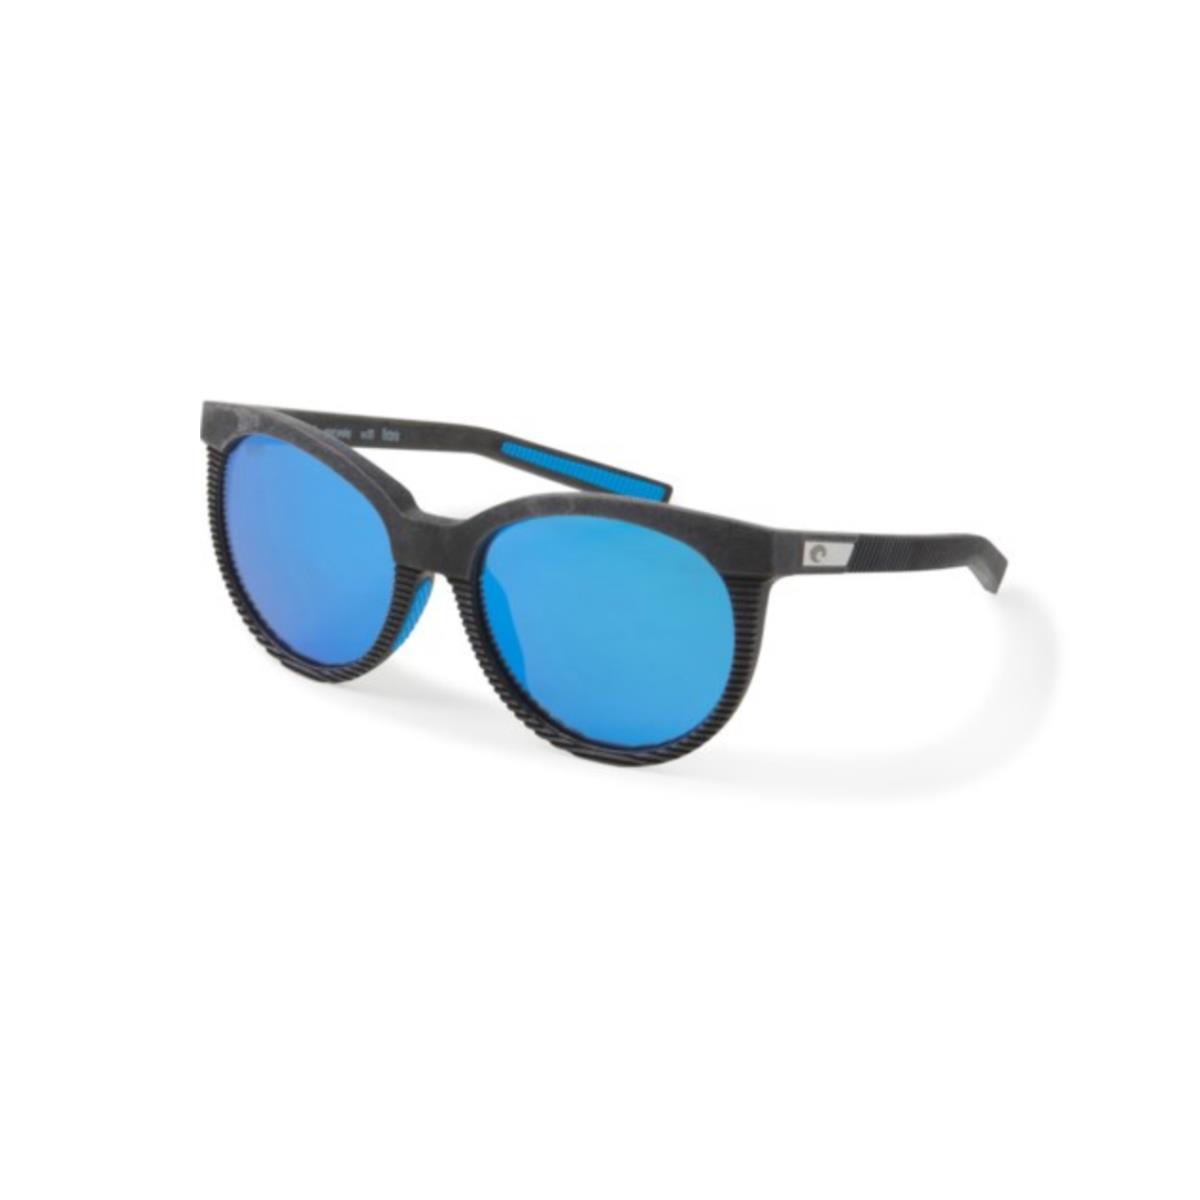 Costa For Men Women Victoria Sunglasses-polarized 580G Lenses - Blue Mirror